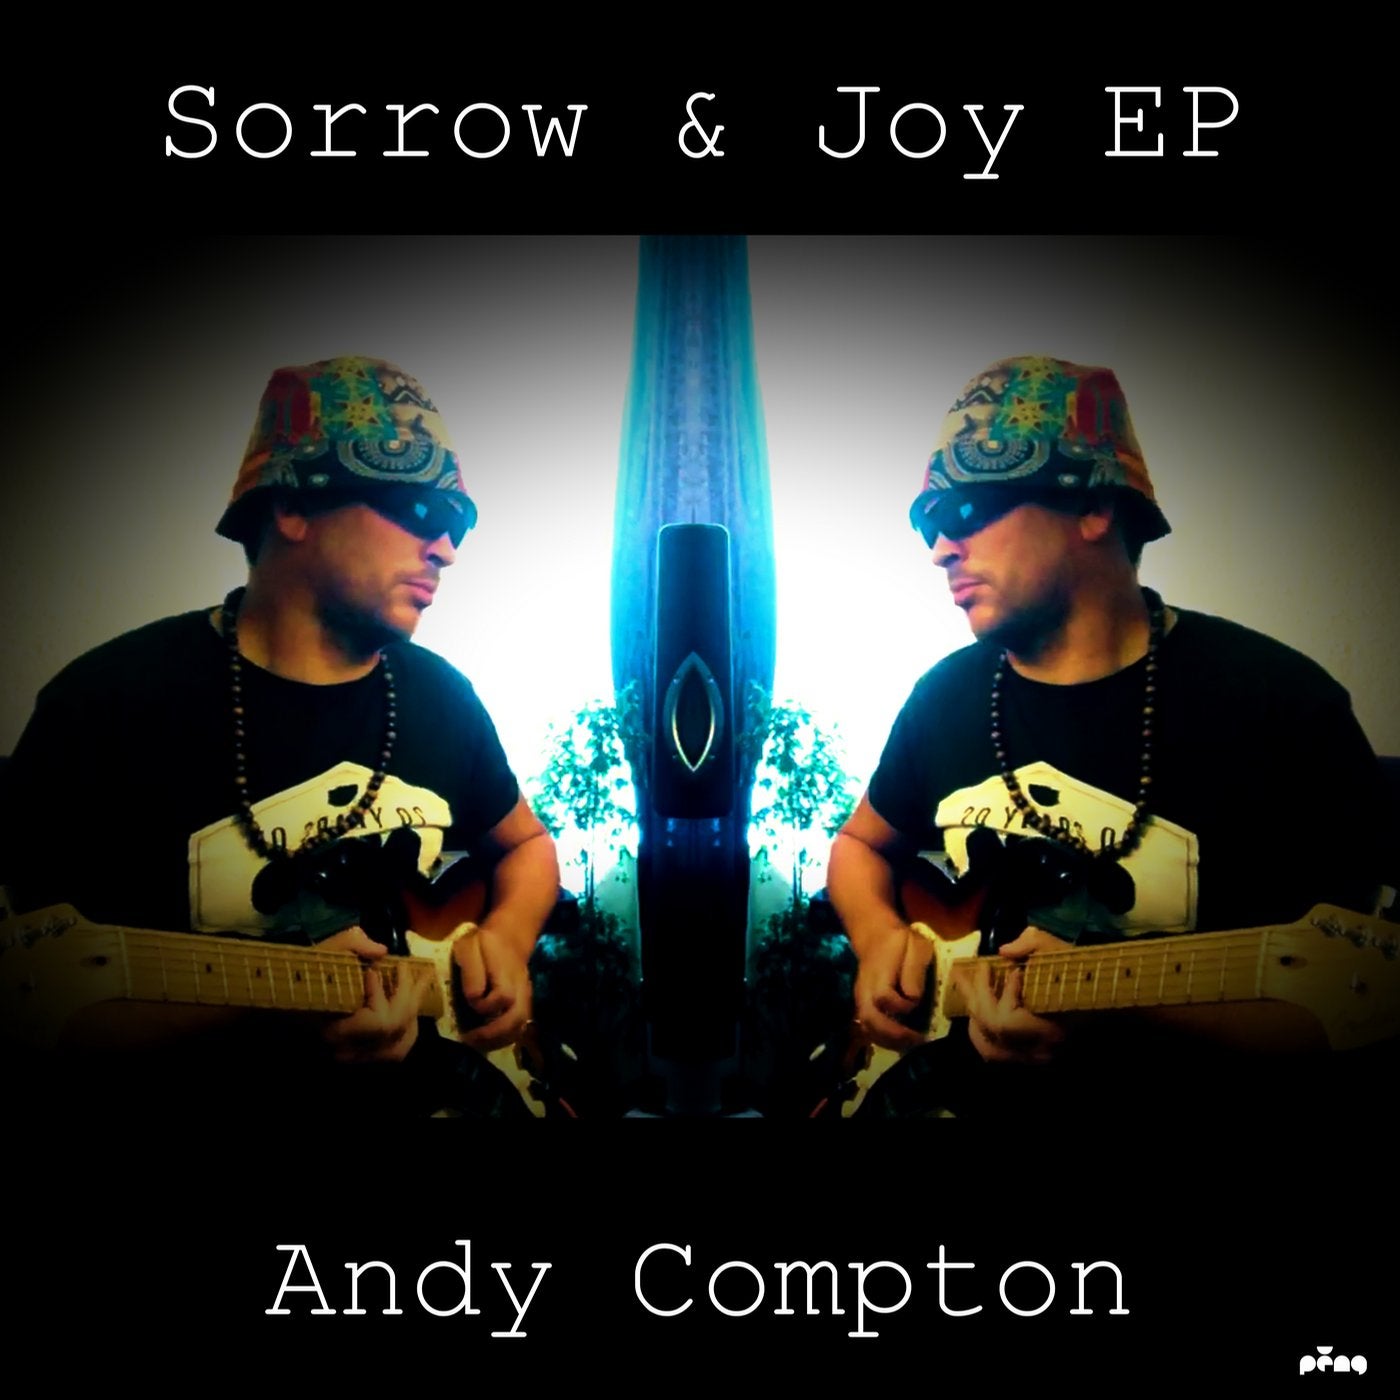 Sorrow & Joy EP